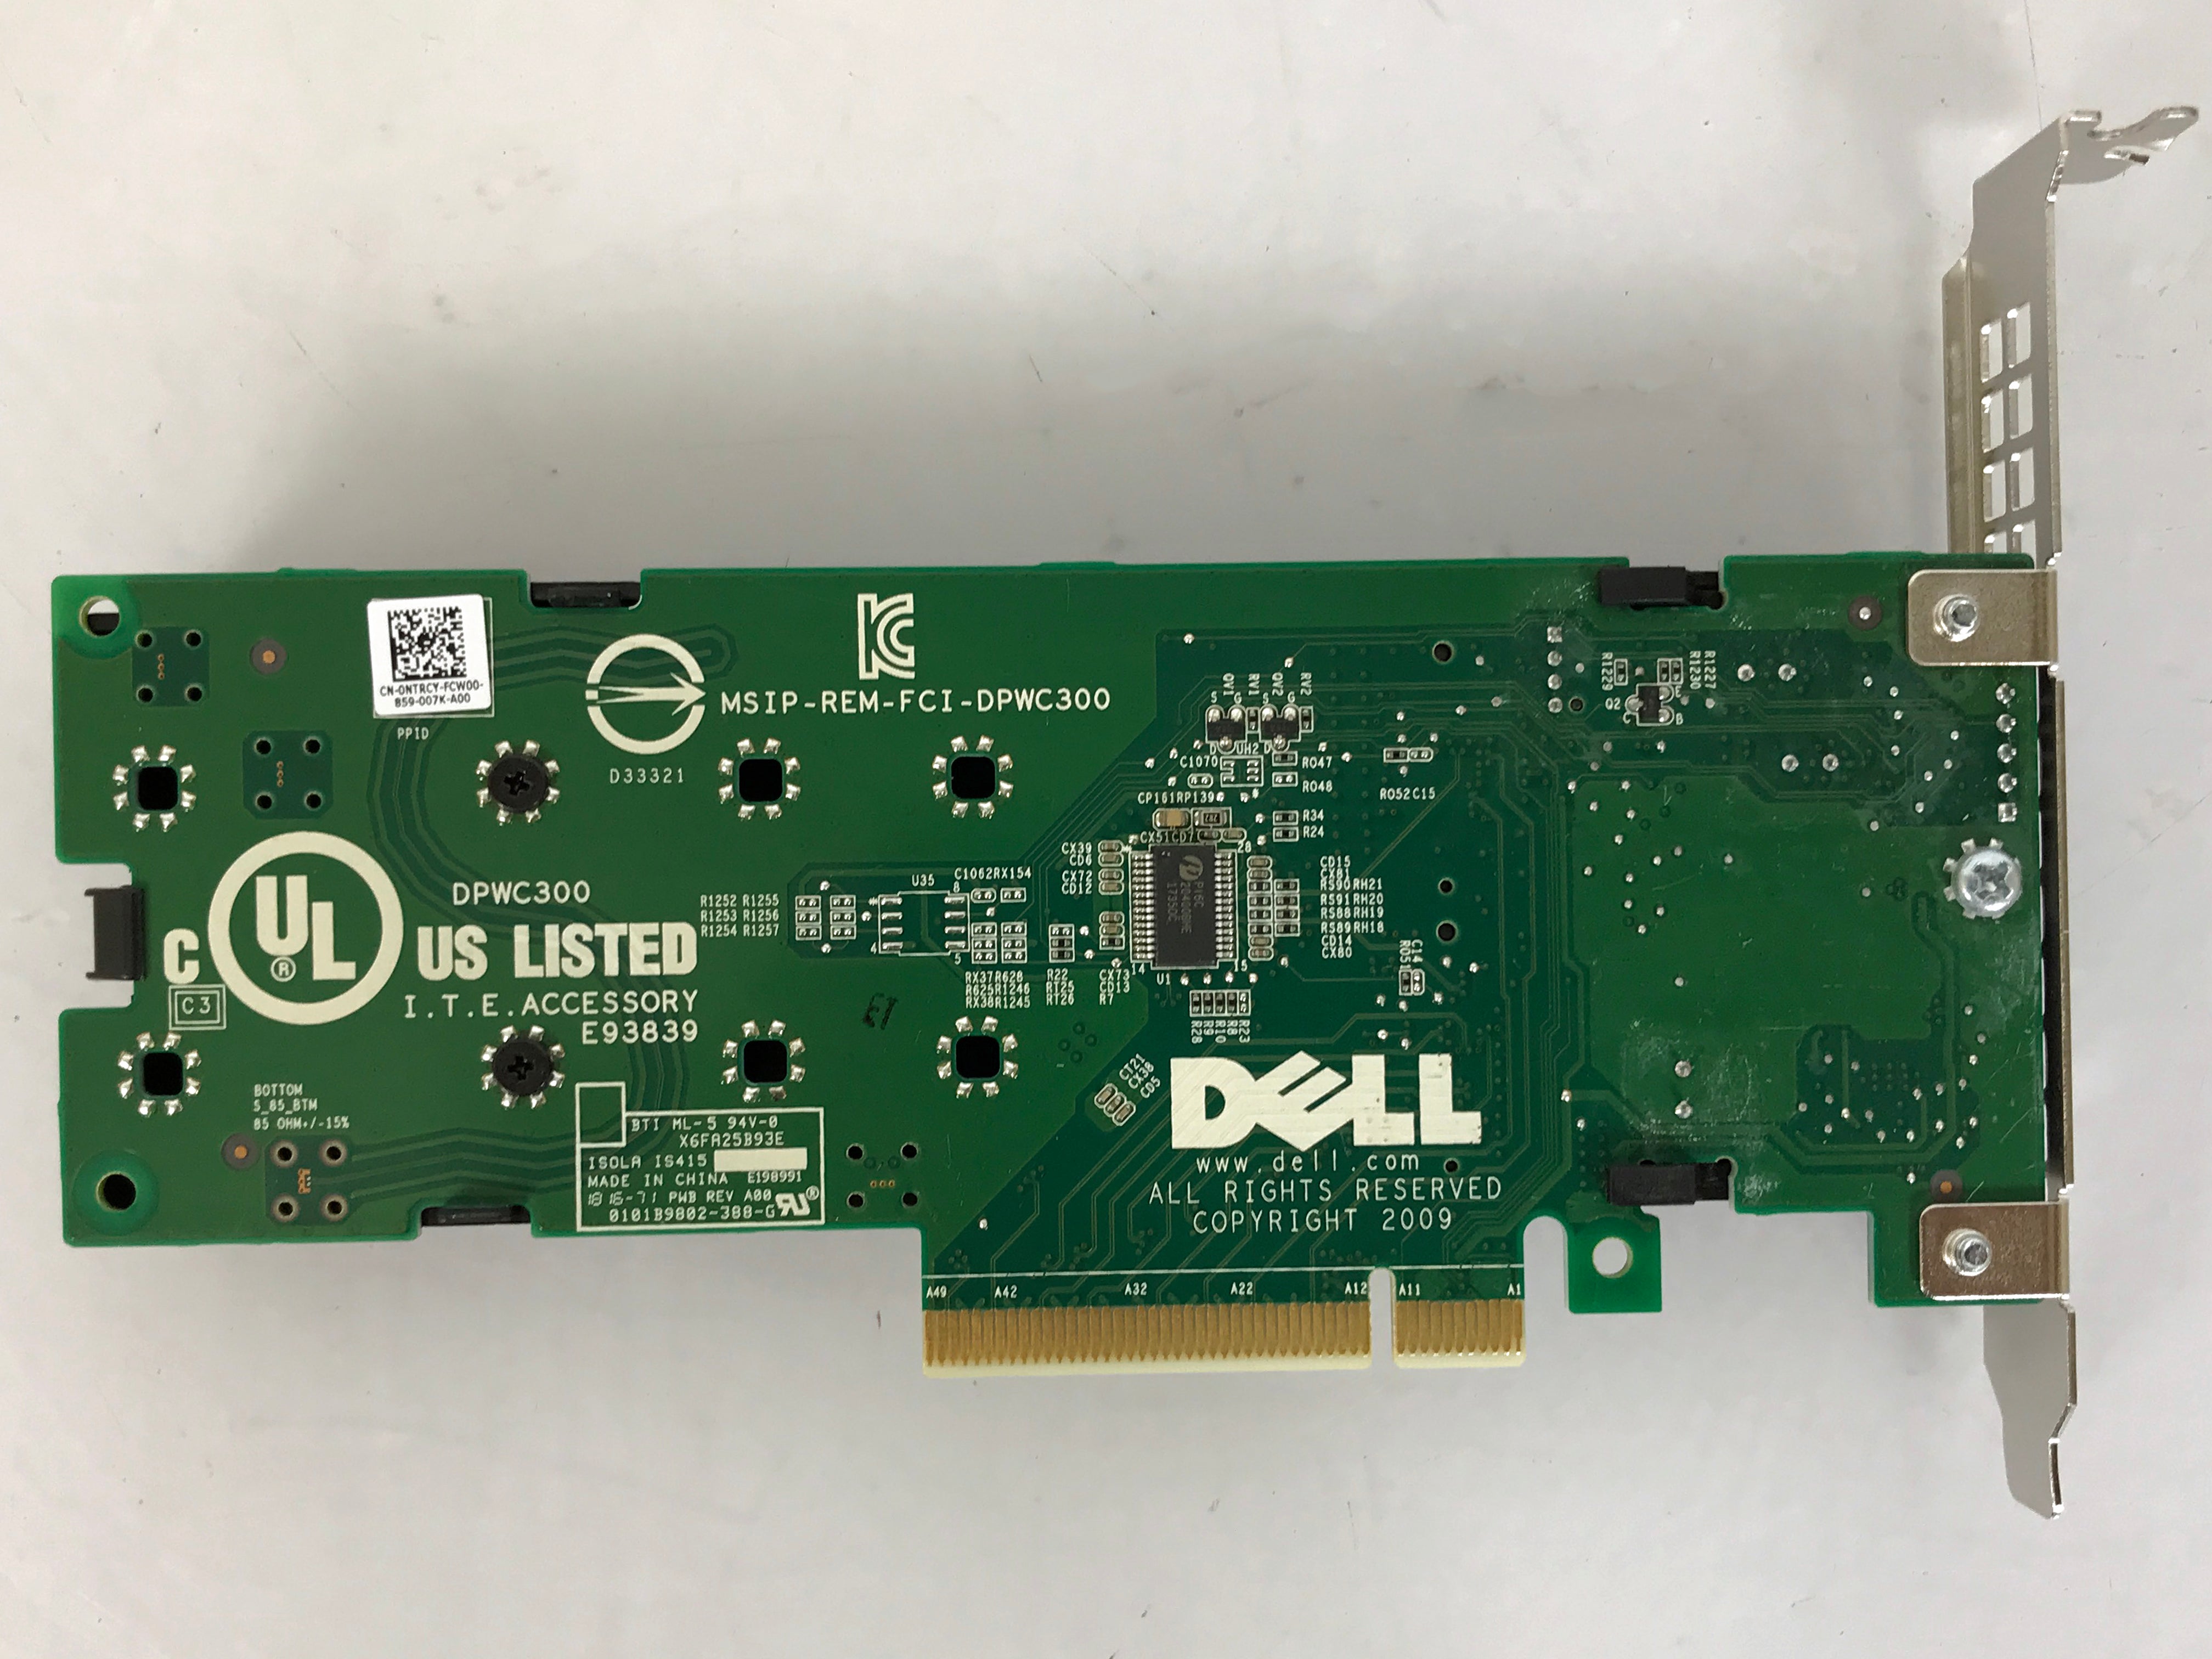 Dell DPWC300 FH PCIe-x8 Dual M.2 NVMe Converter